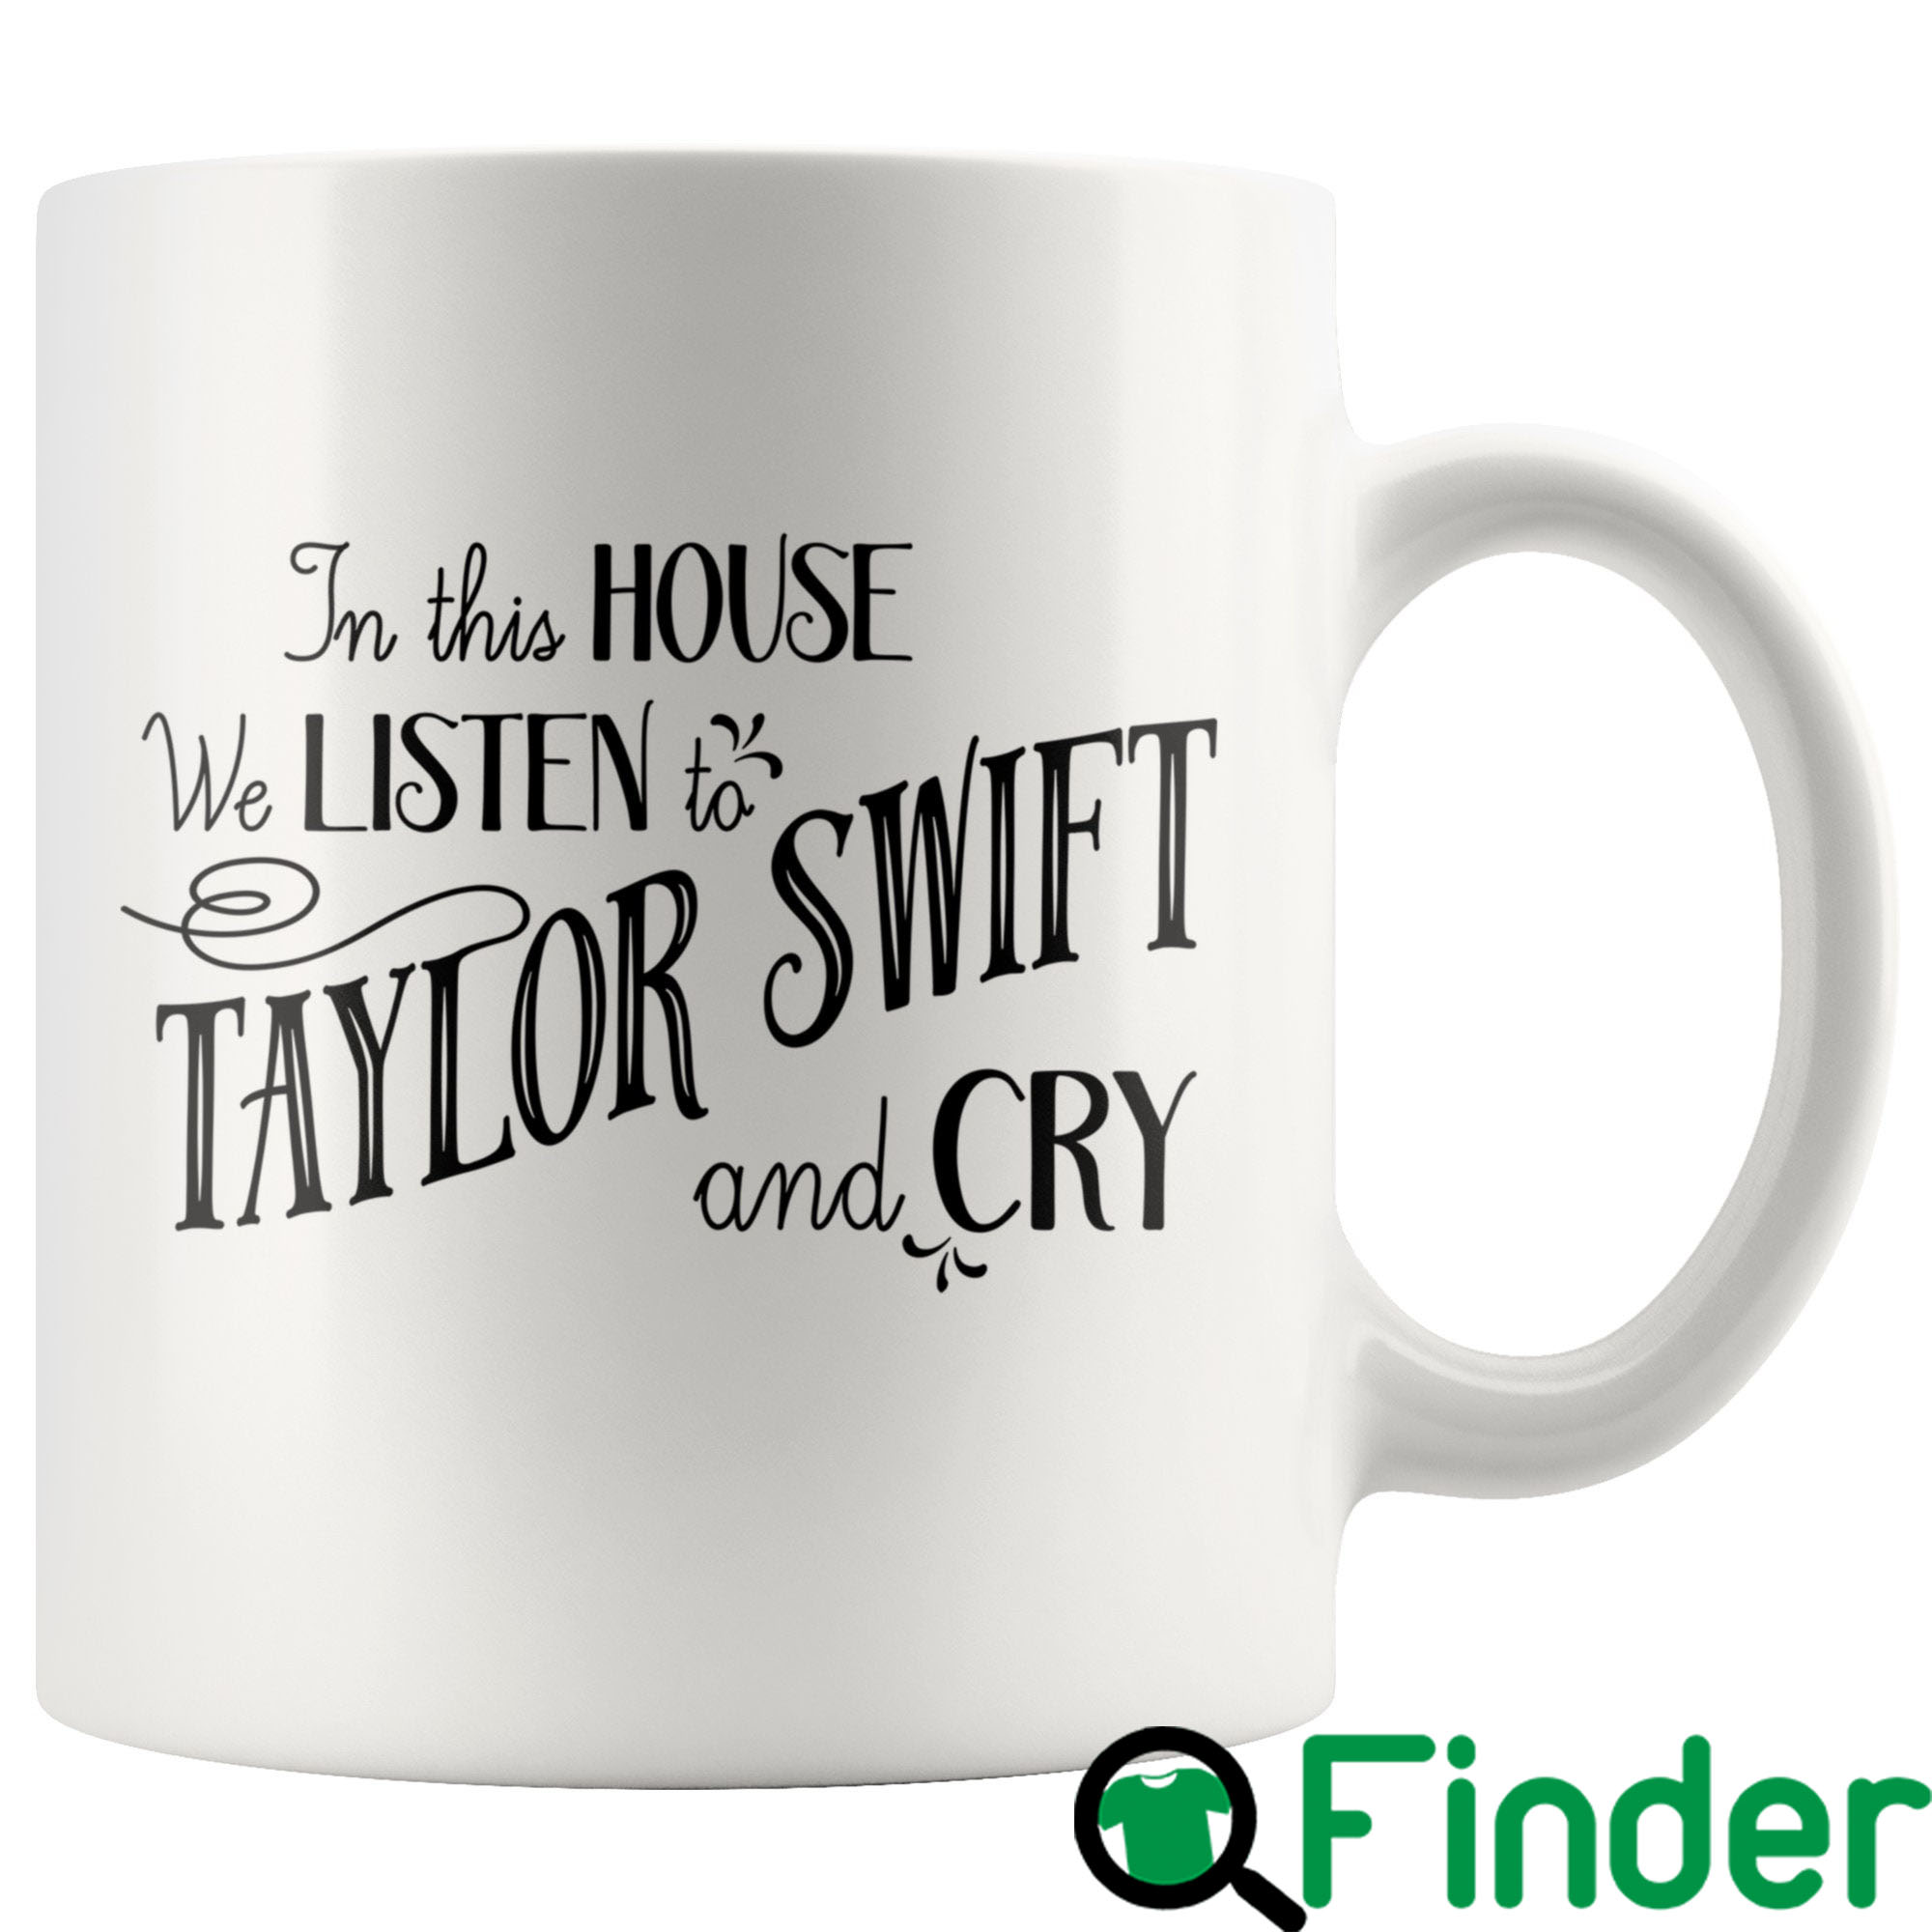 https://q-finder.com/wp-content/uploads/2021/12/Taylor-Swift-Listen-And-Cry-Taylors-Version-Mug-2.jpg